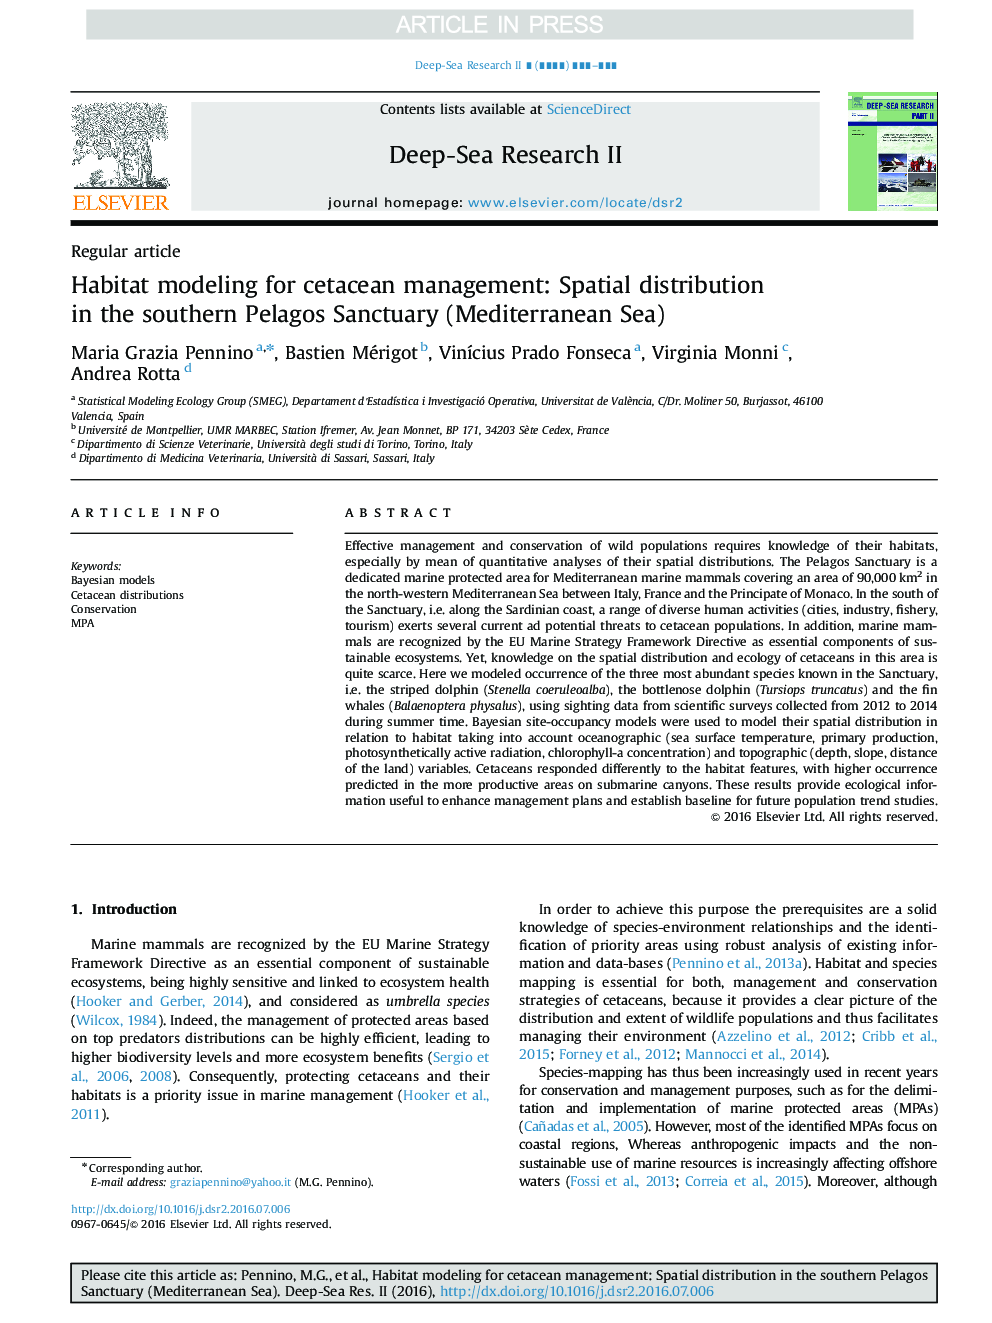 Habitat modeling for cetacean management: Spatial distribution in the southern Pelagos Sanctuary (Mediterranean Sea)